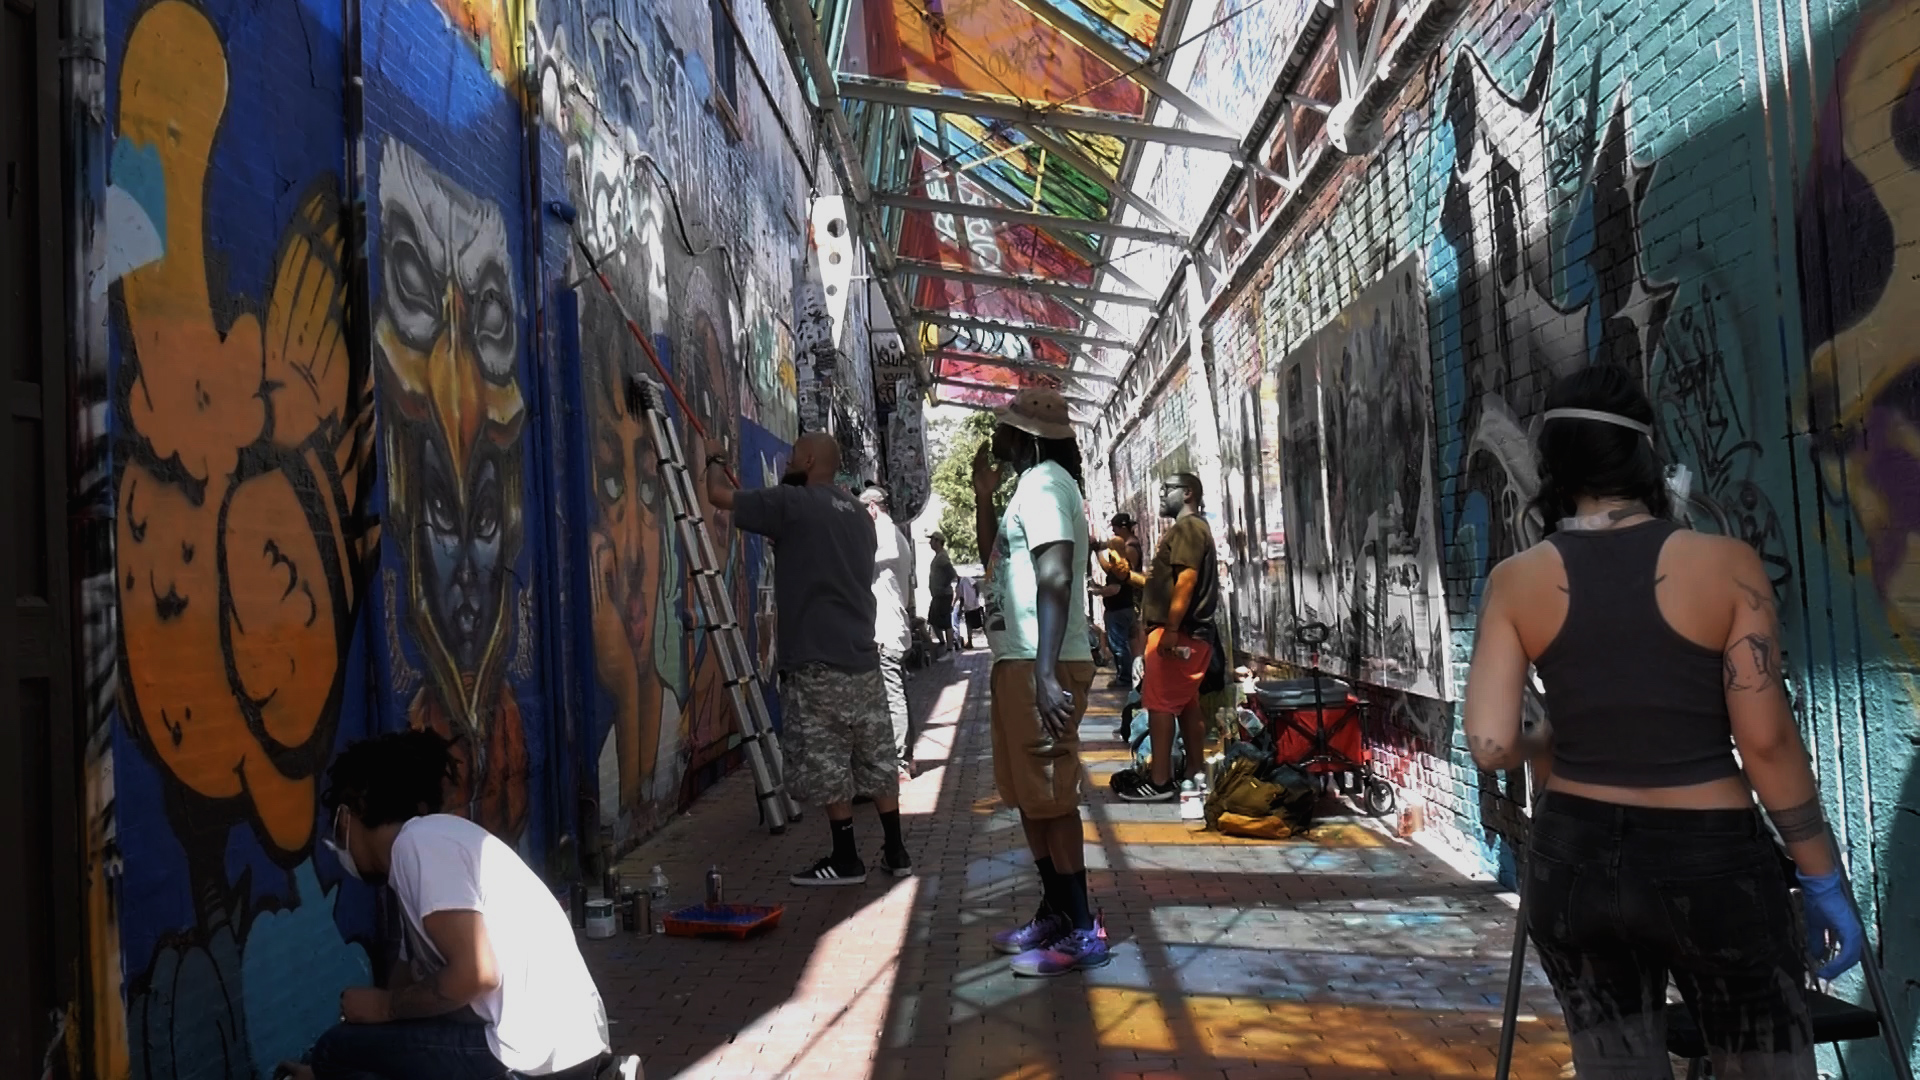 Documentary Film Of Graffiti Alley In Cambridge Screening Discussion 11 12 19